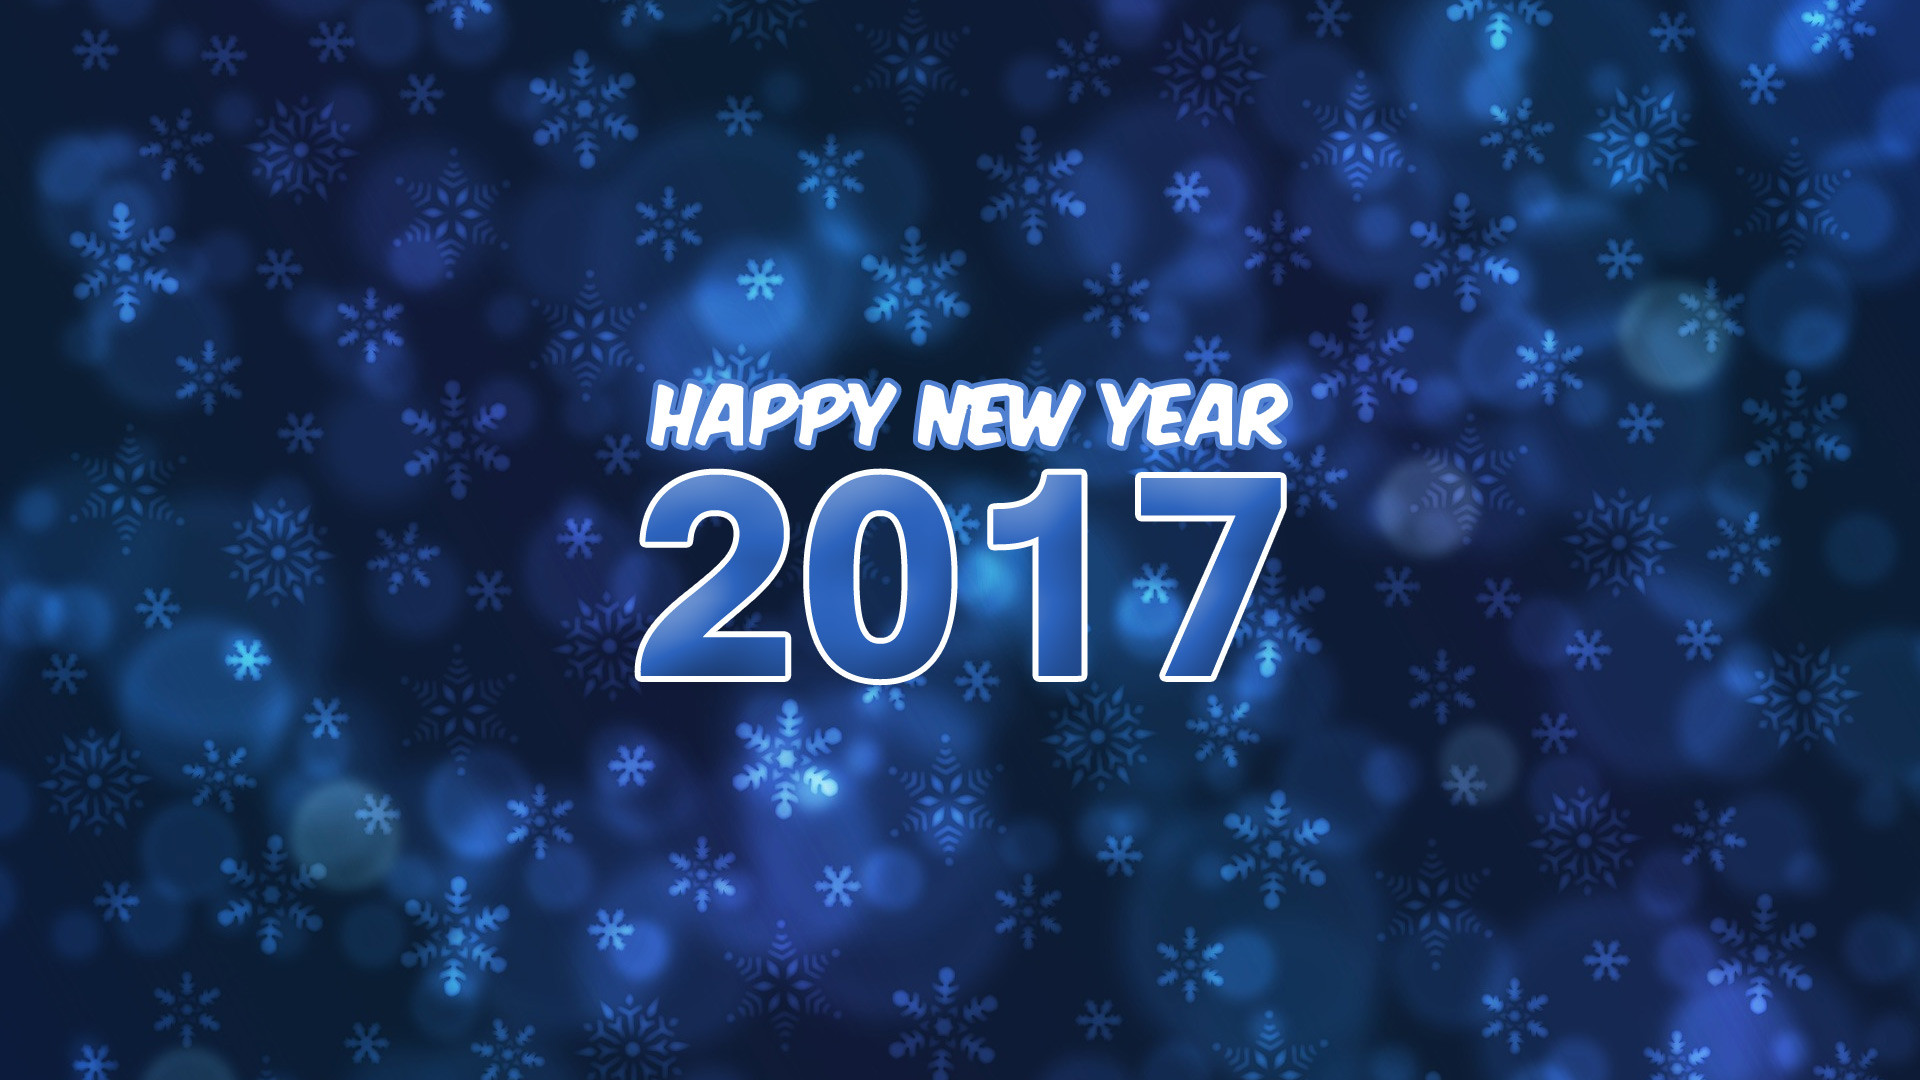 1920x1080 Happy New Year 2017 background